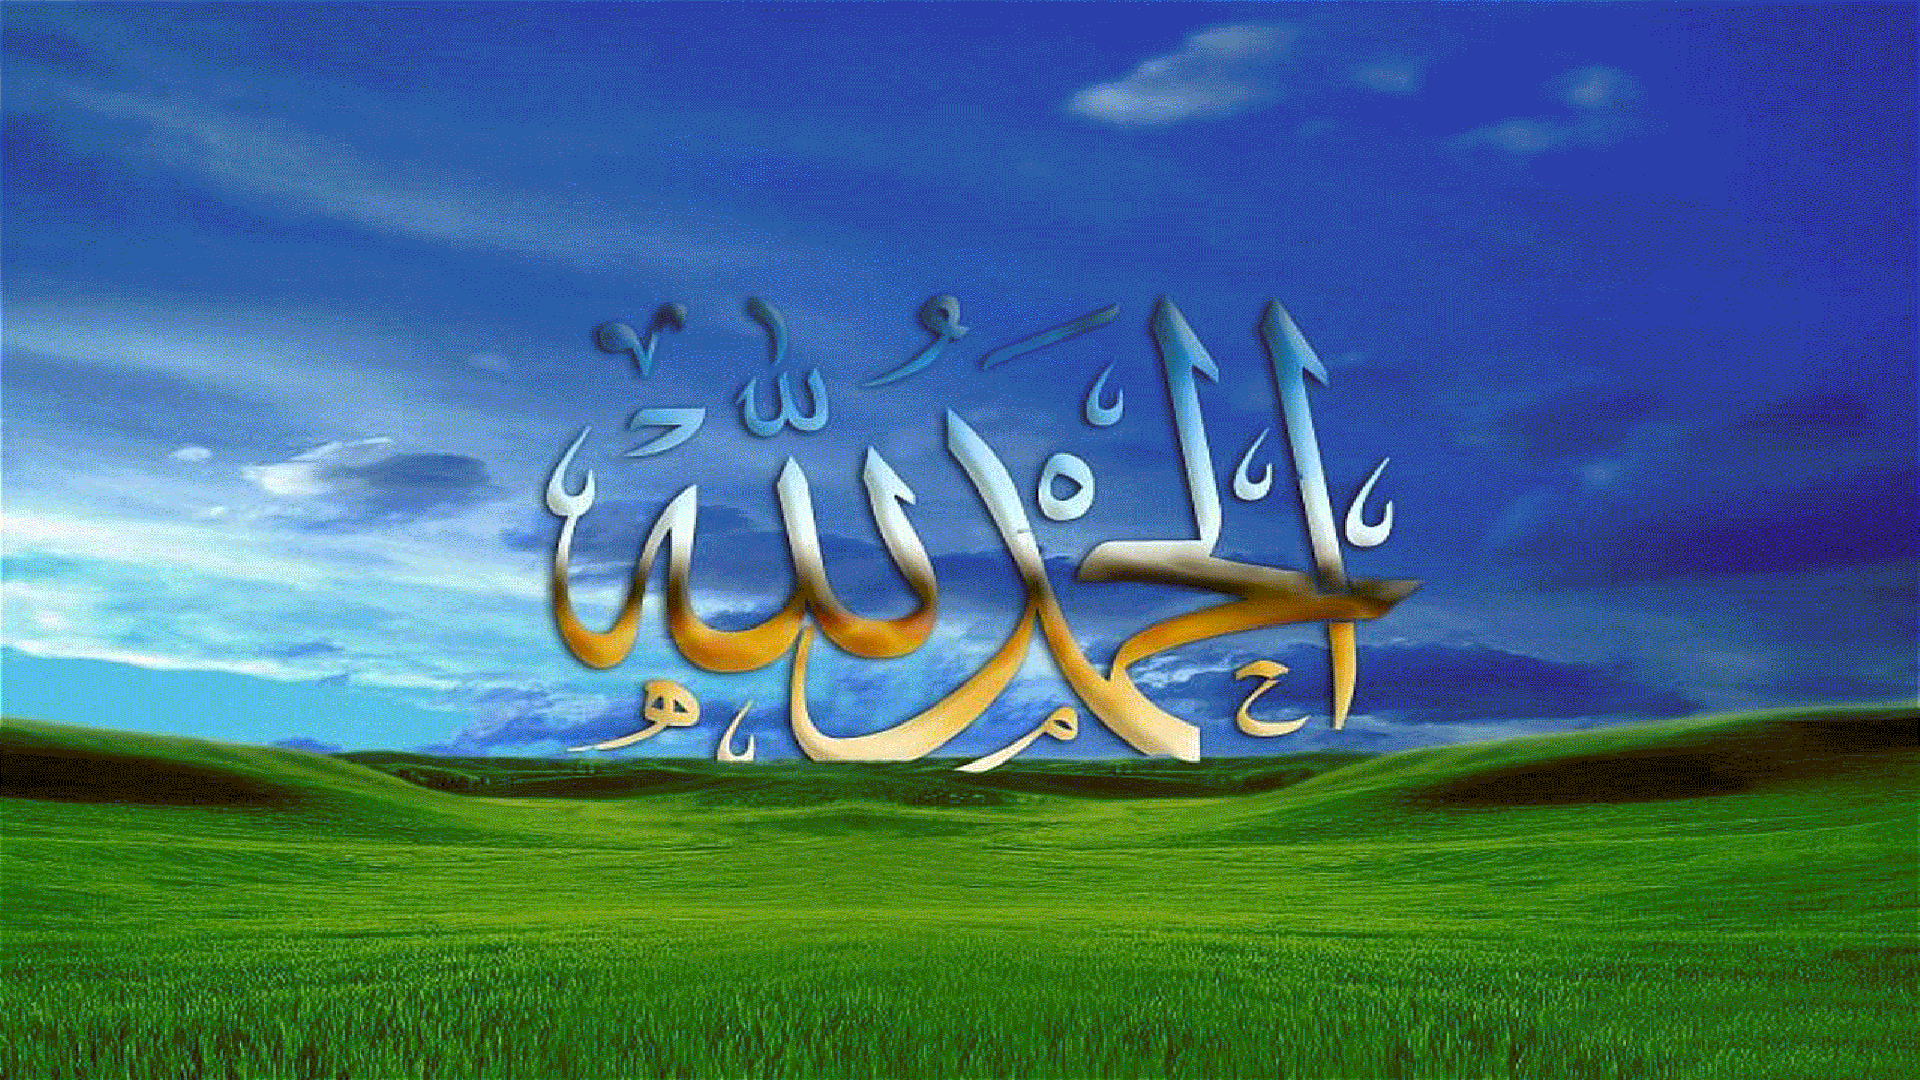  48 Islamic Full HD Wallpapers Download on WallpaperSafari